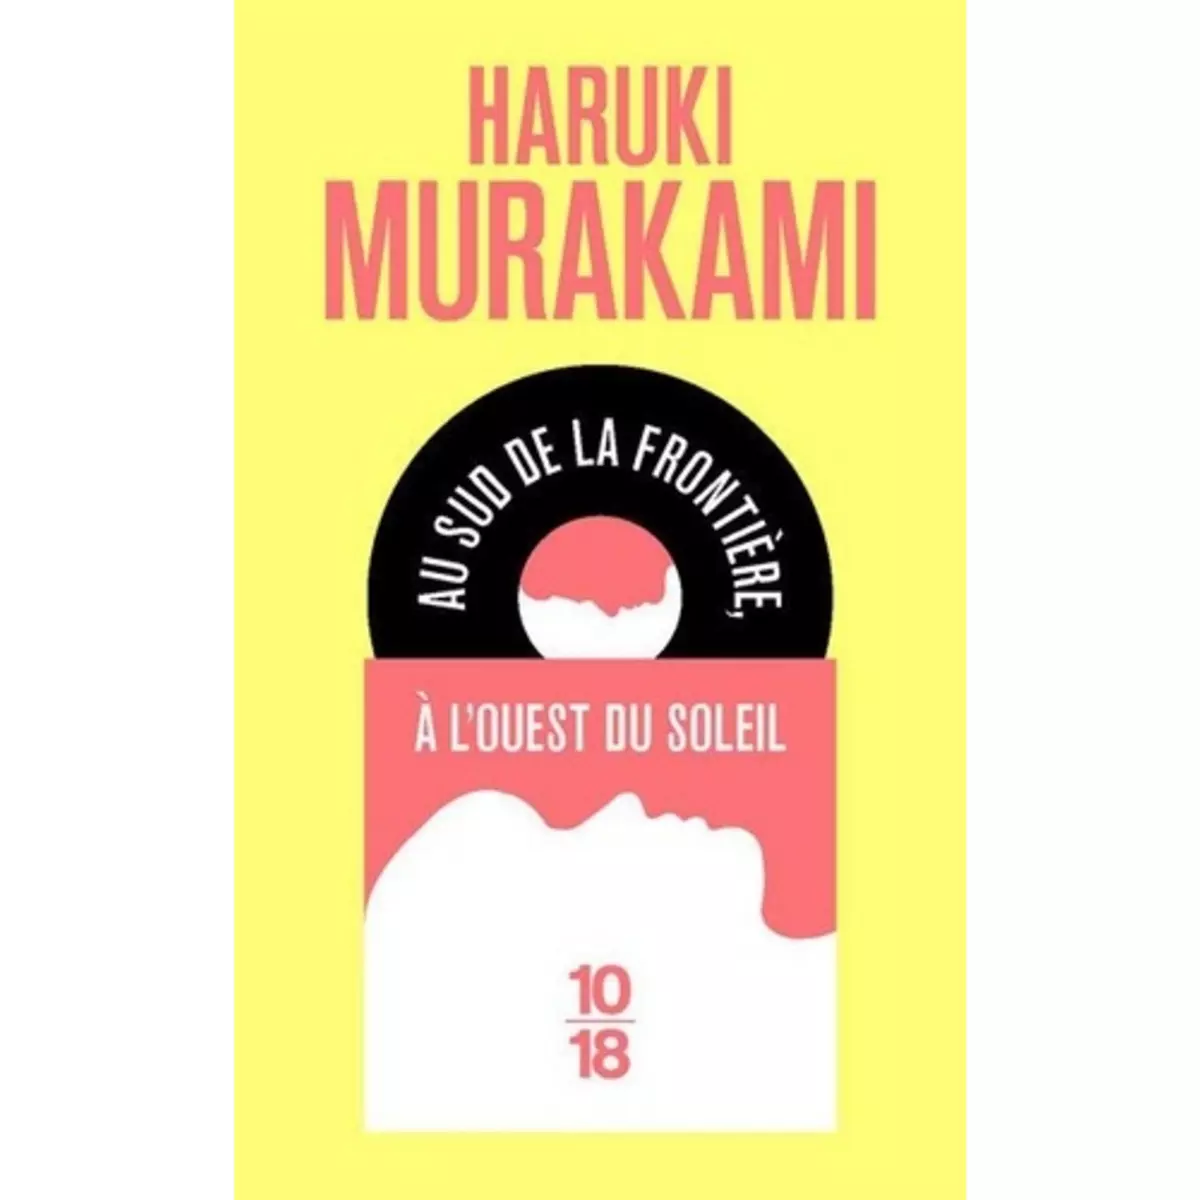  AU SUD DE LA FRONTIERE, A L'OUEST DU SOLEIL, Murakami Haruki